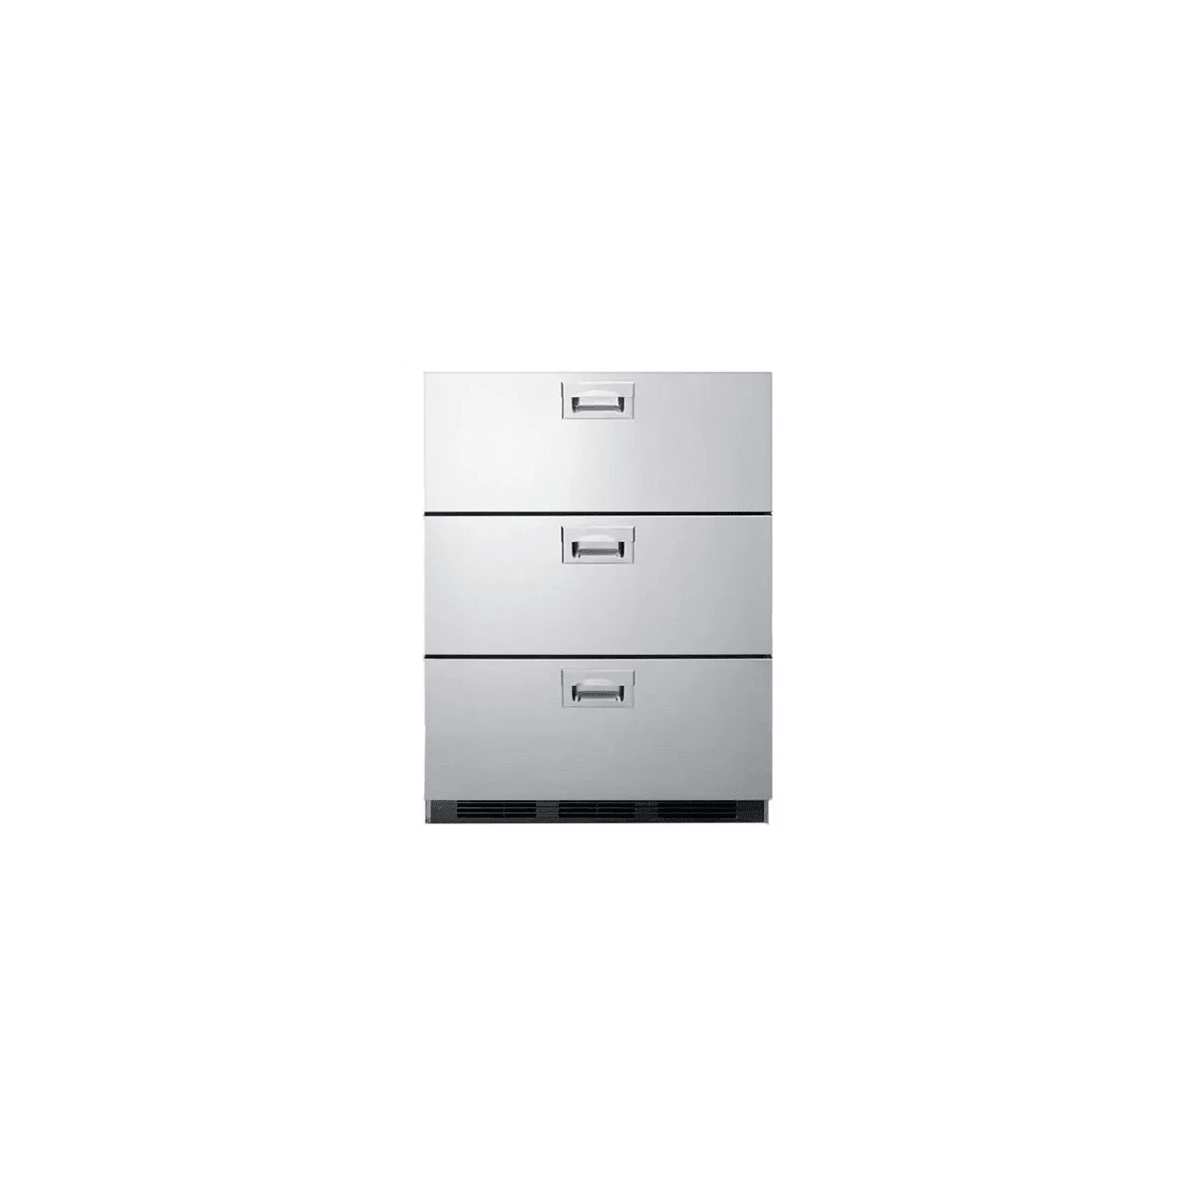 Drawer Stainless Steel All Refrigerator, 24 Inch Wide 3 Drawer Dresser